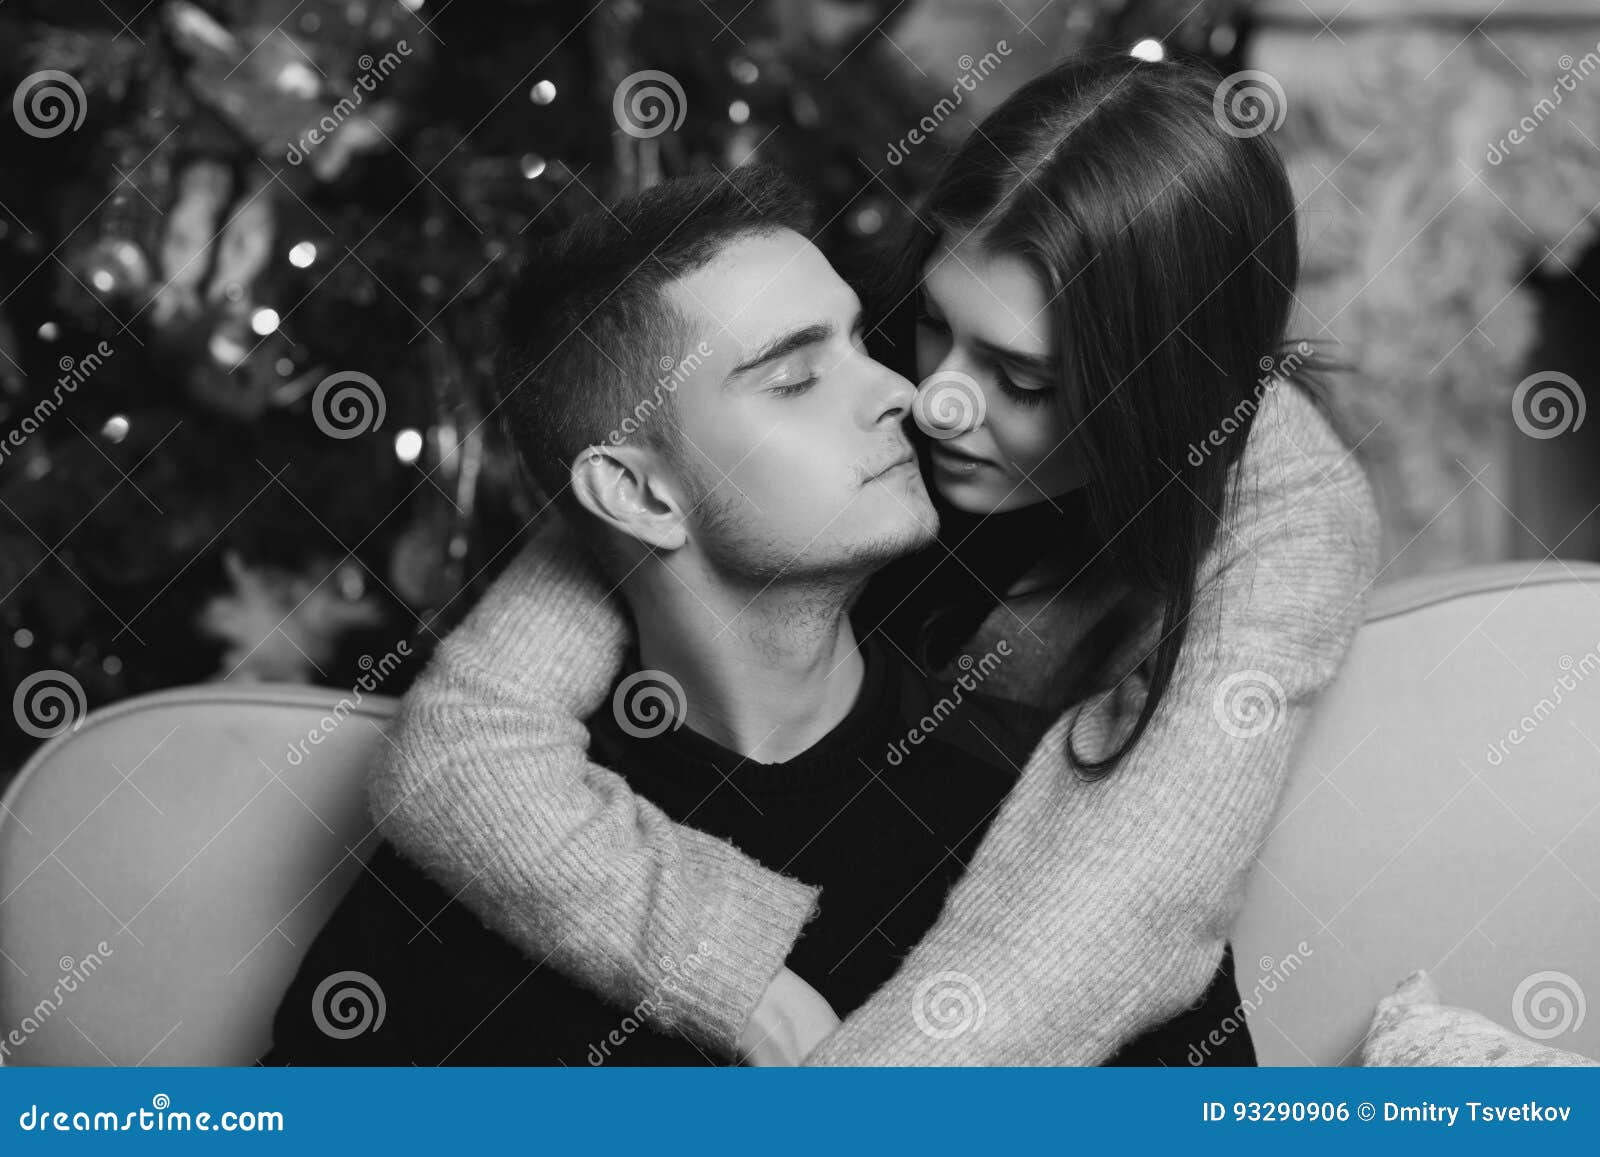 Romantic Couple Hugging in Christmas Interior Stock Photo - Image ...